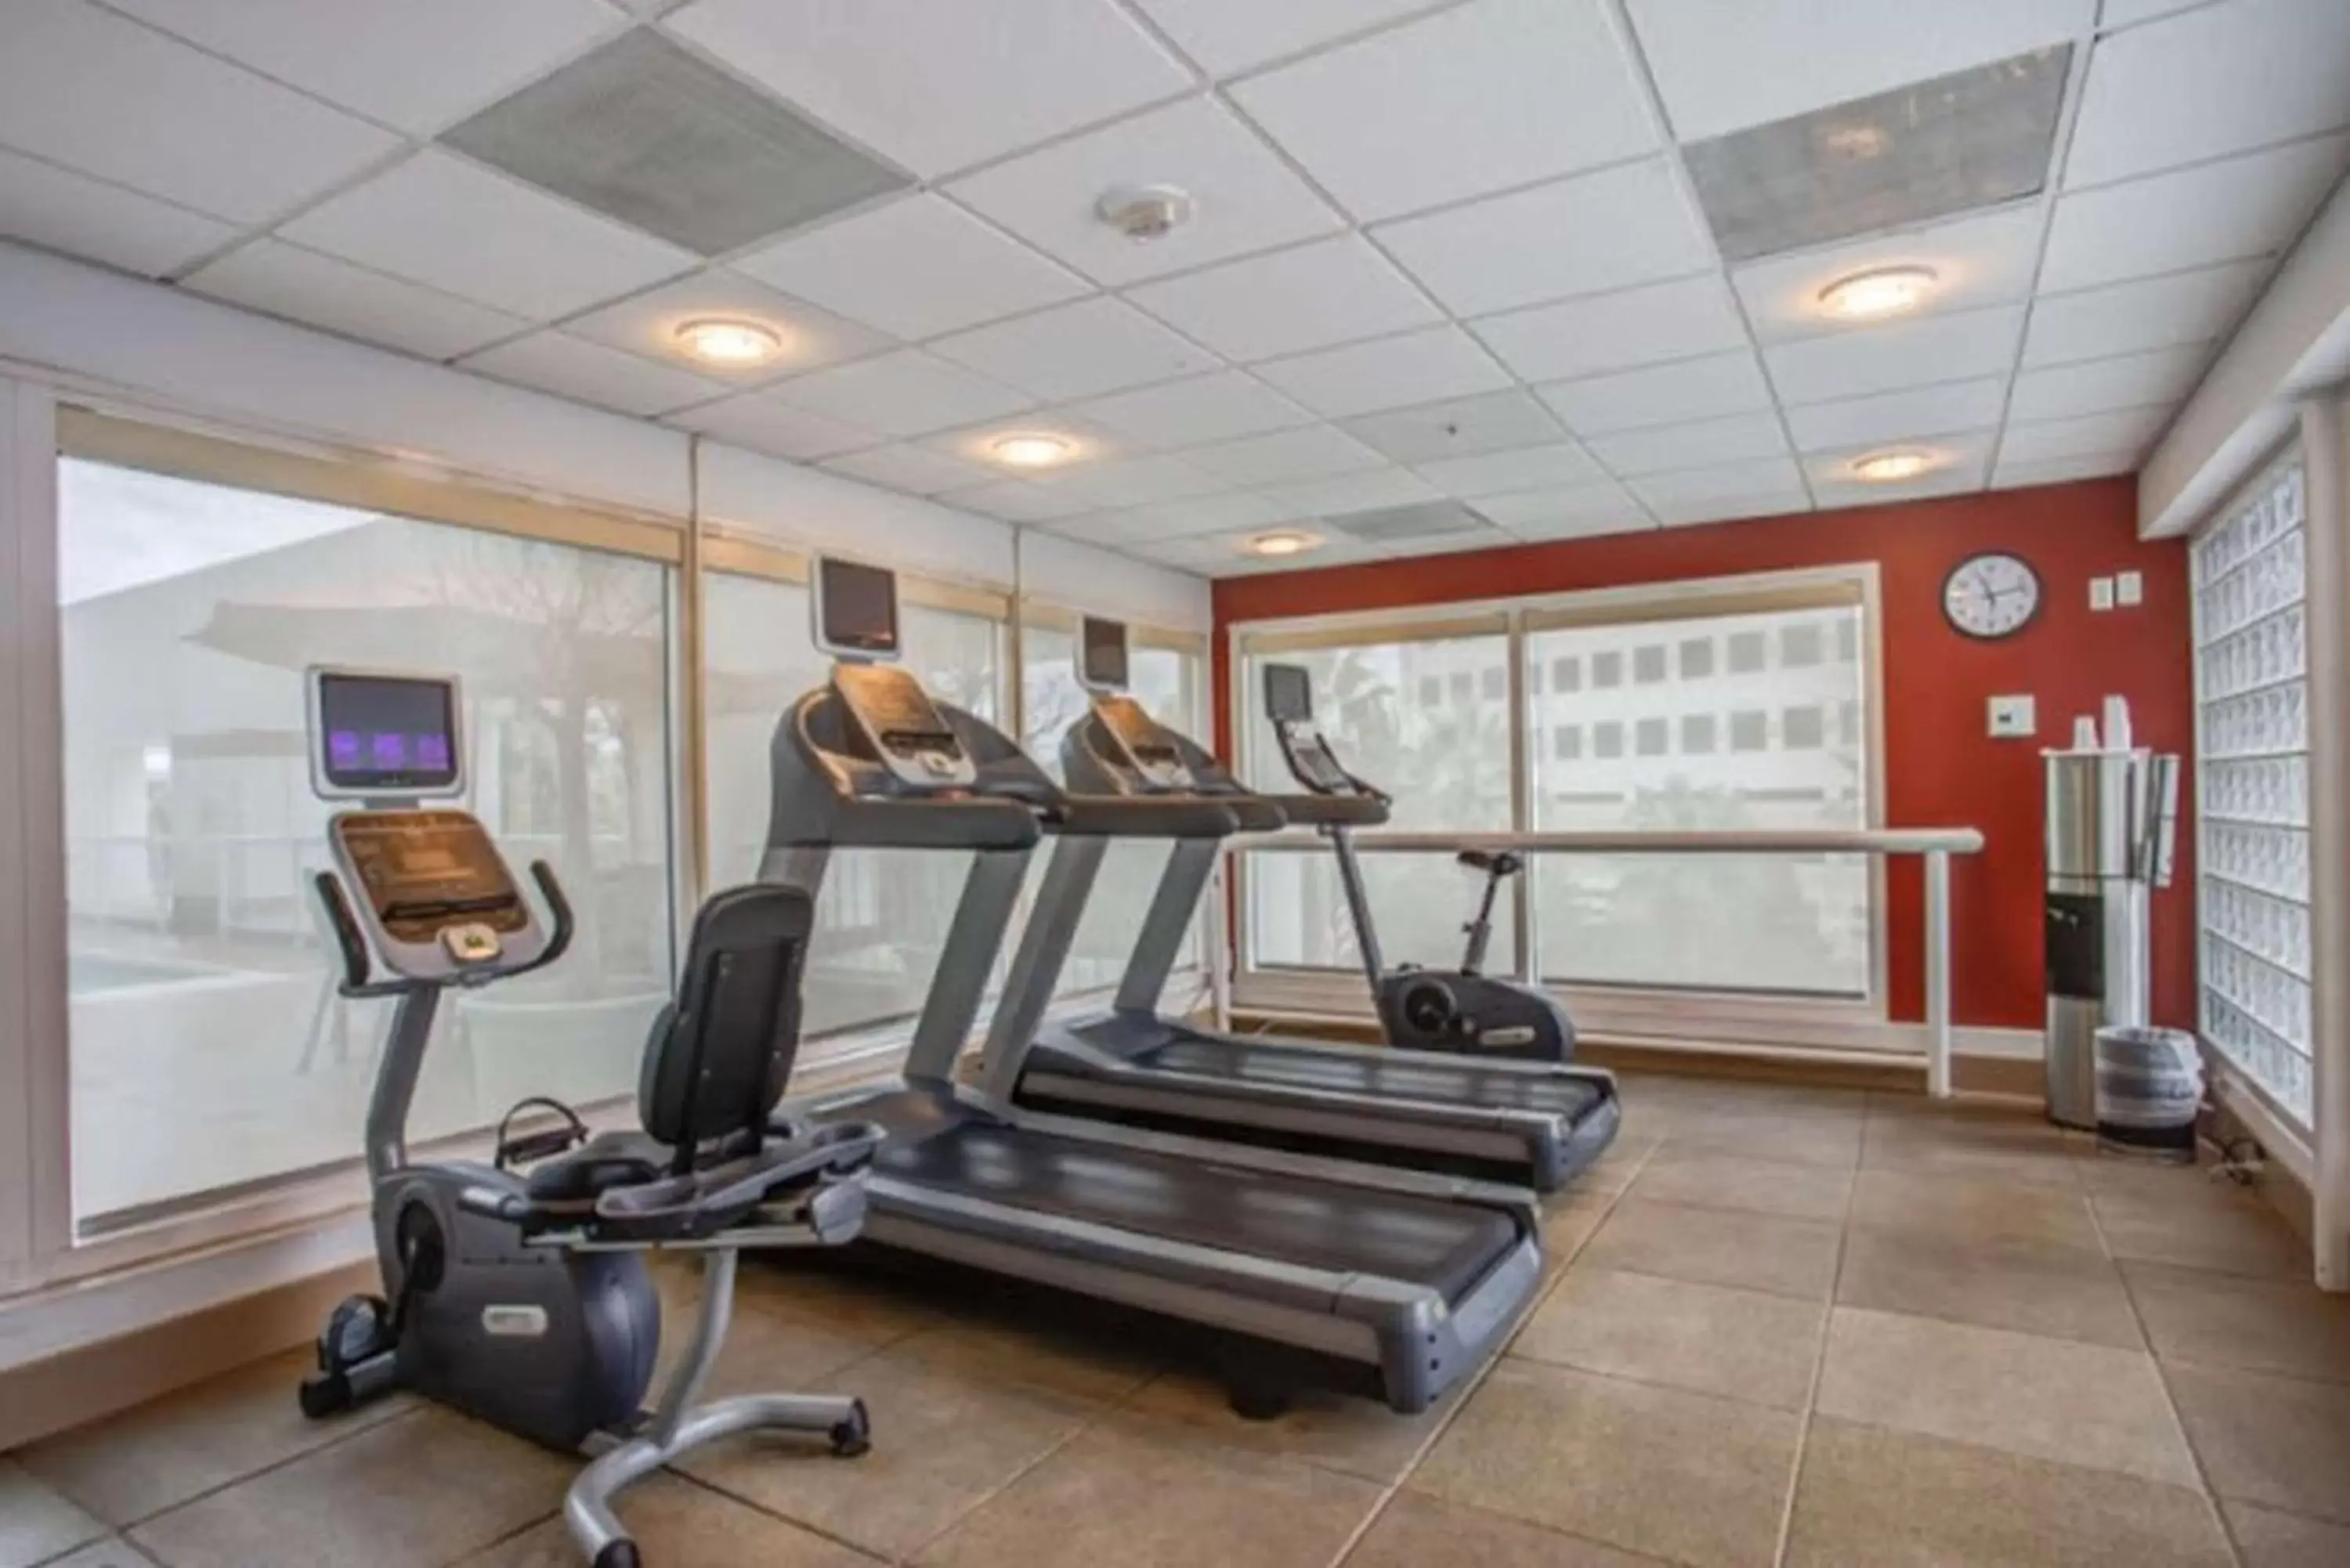 Fitness centre/facilities, Fitness Center/Facilities in Hilton San Jose